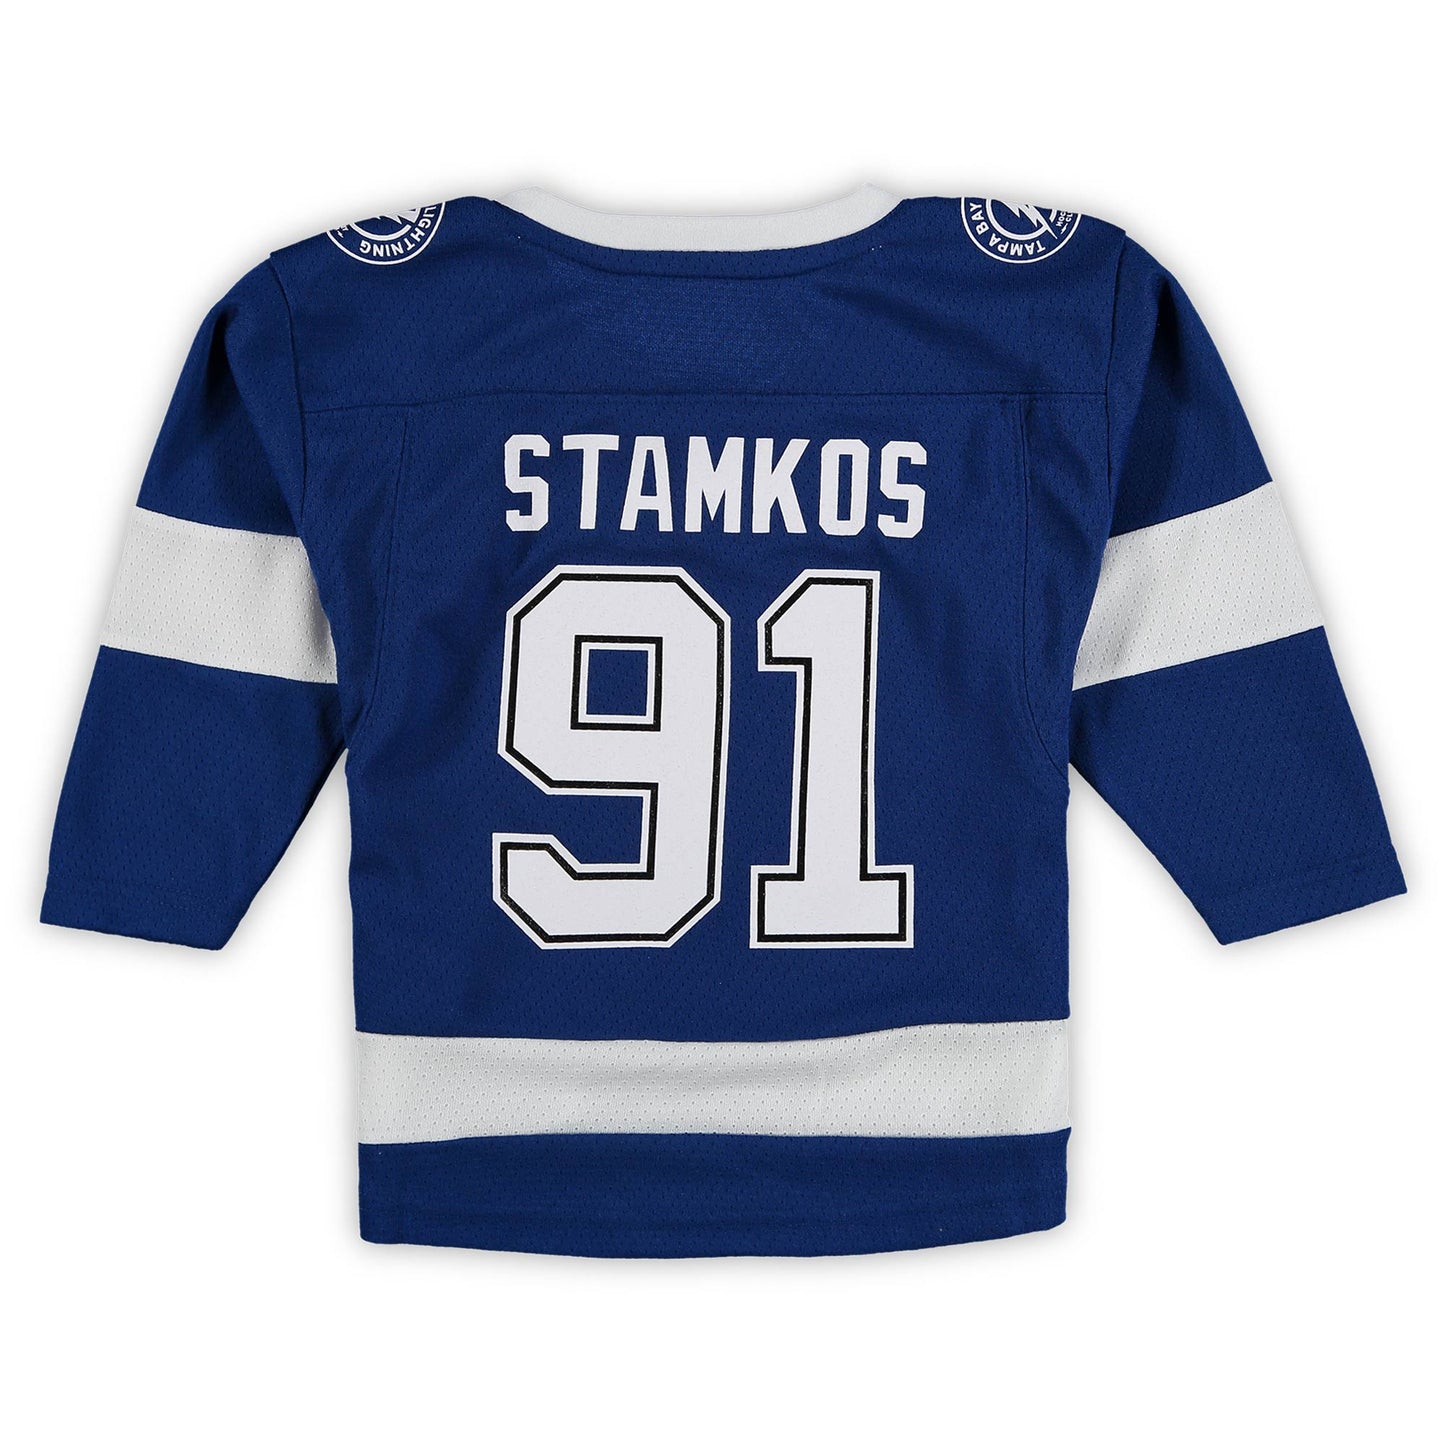 Steven Stamkos Tampa Bay Lightning Toddler Replica Player Jersey - Blue